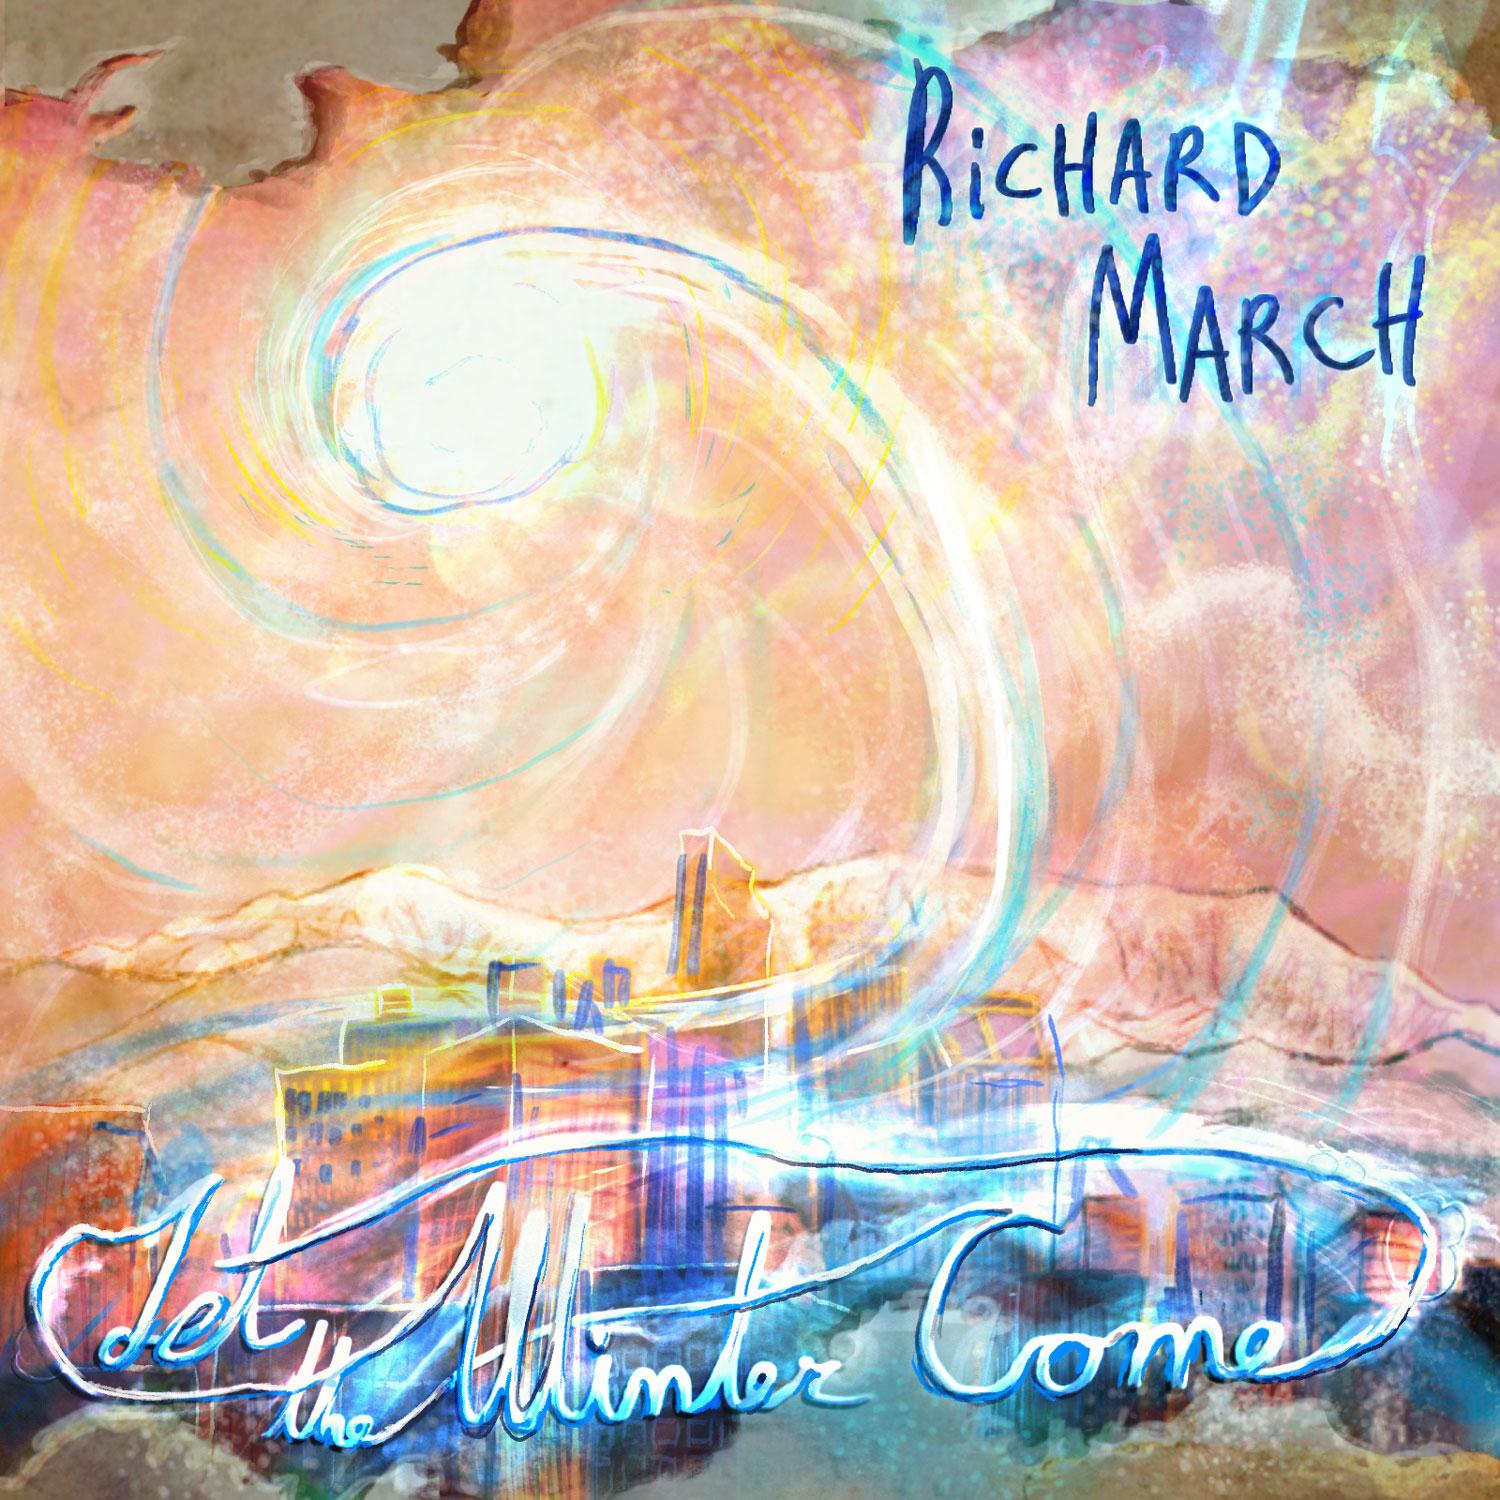 Richard March ‘Let The Winter Come’ album artwork